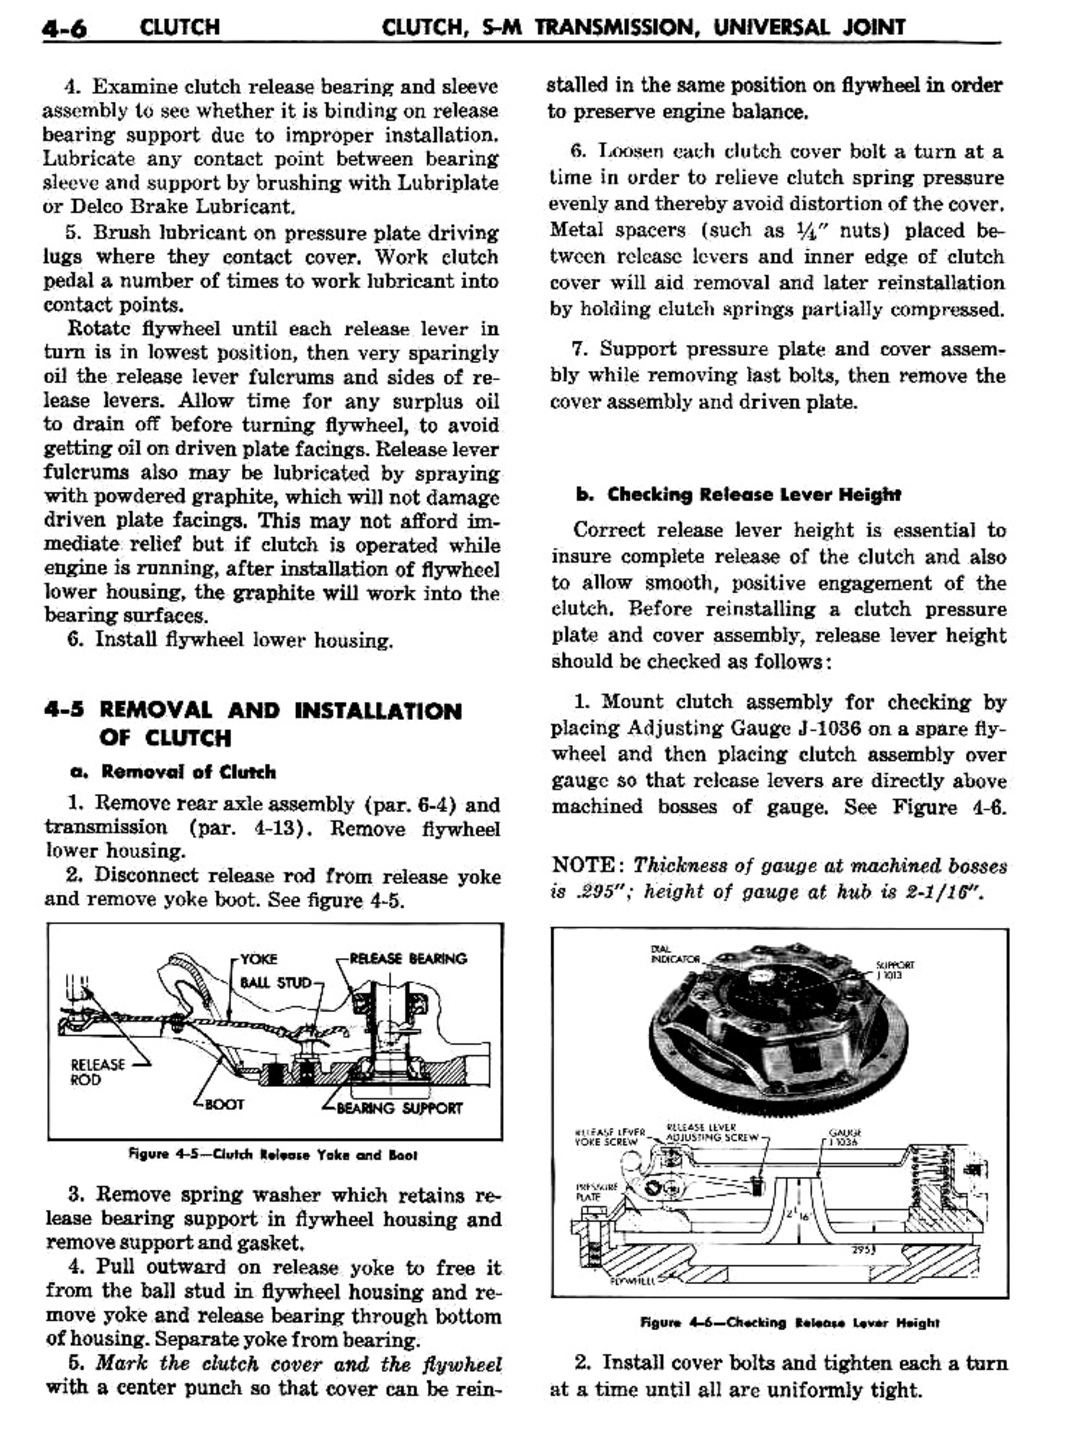 n_05 1960 Buick Shop Manual - Clutch & Man Trans-006-006.jpg